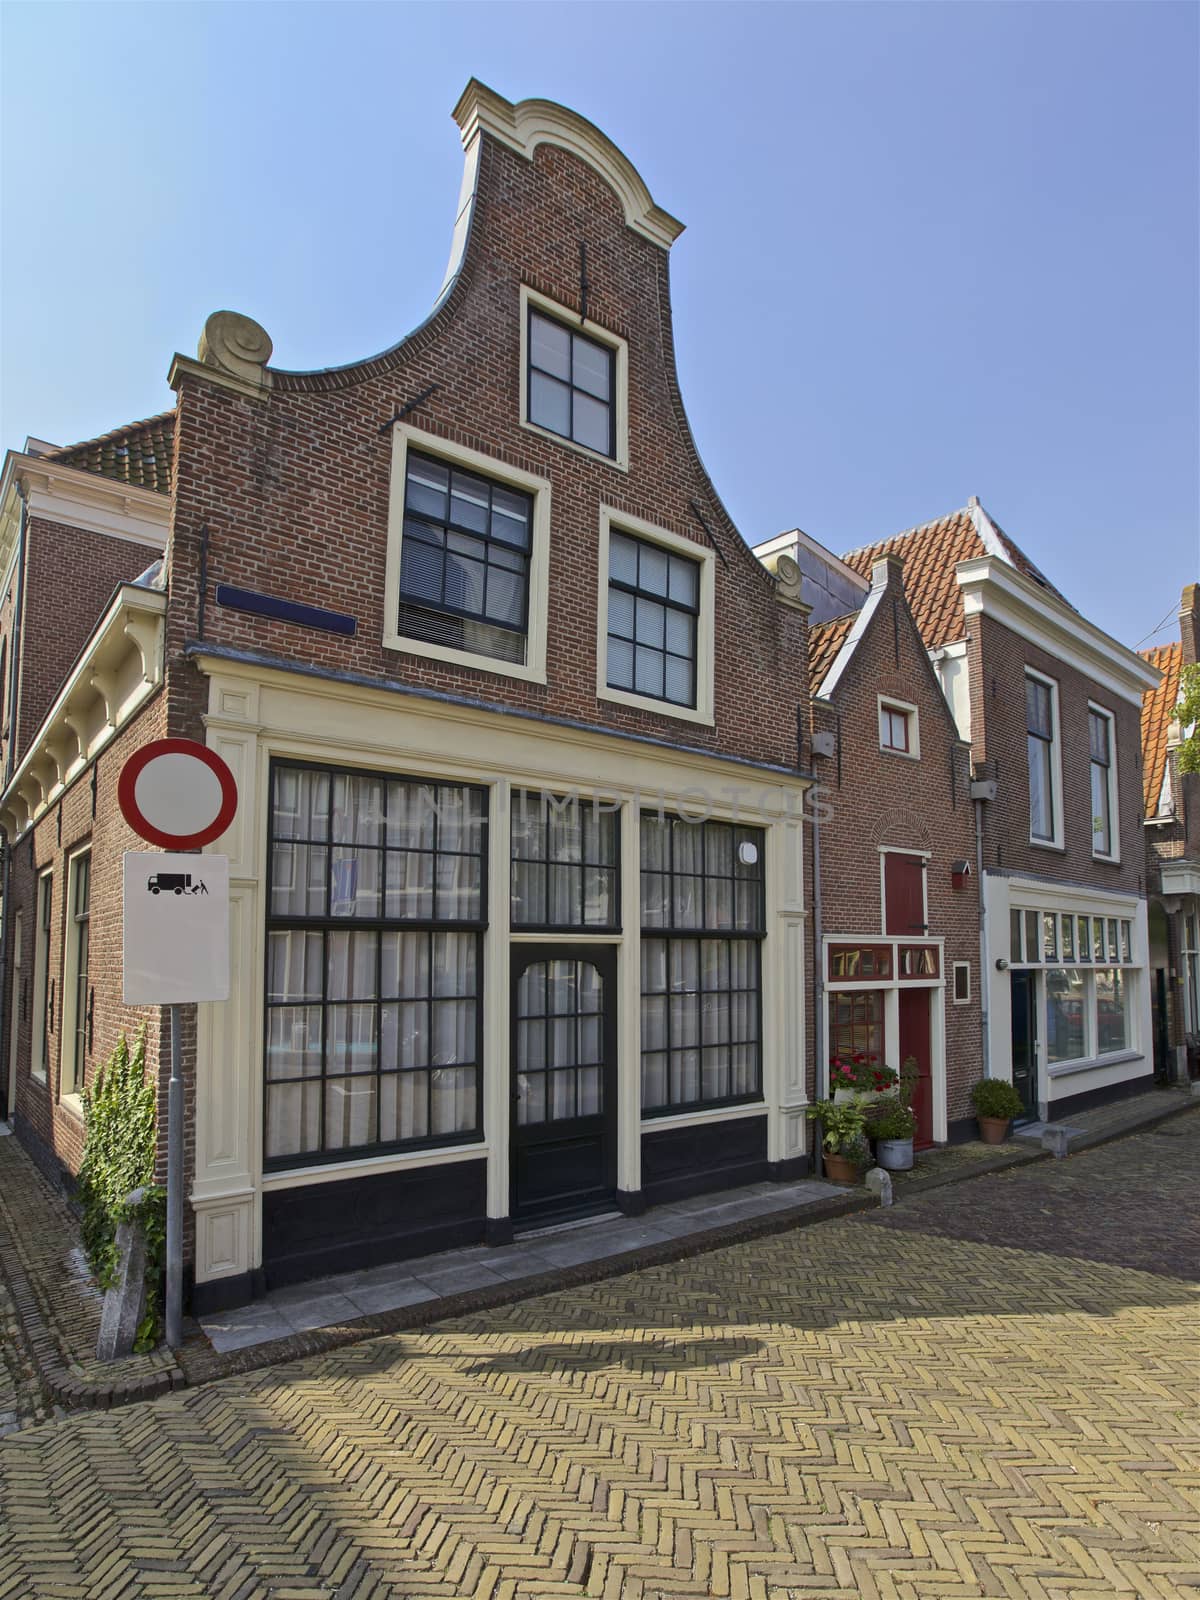 Alkmaar, Netherlands by instinia